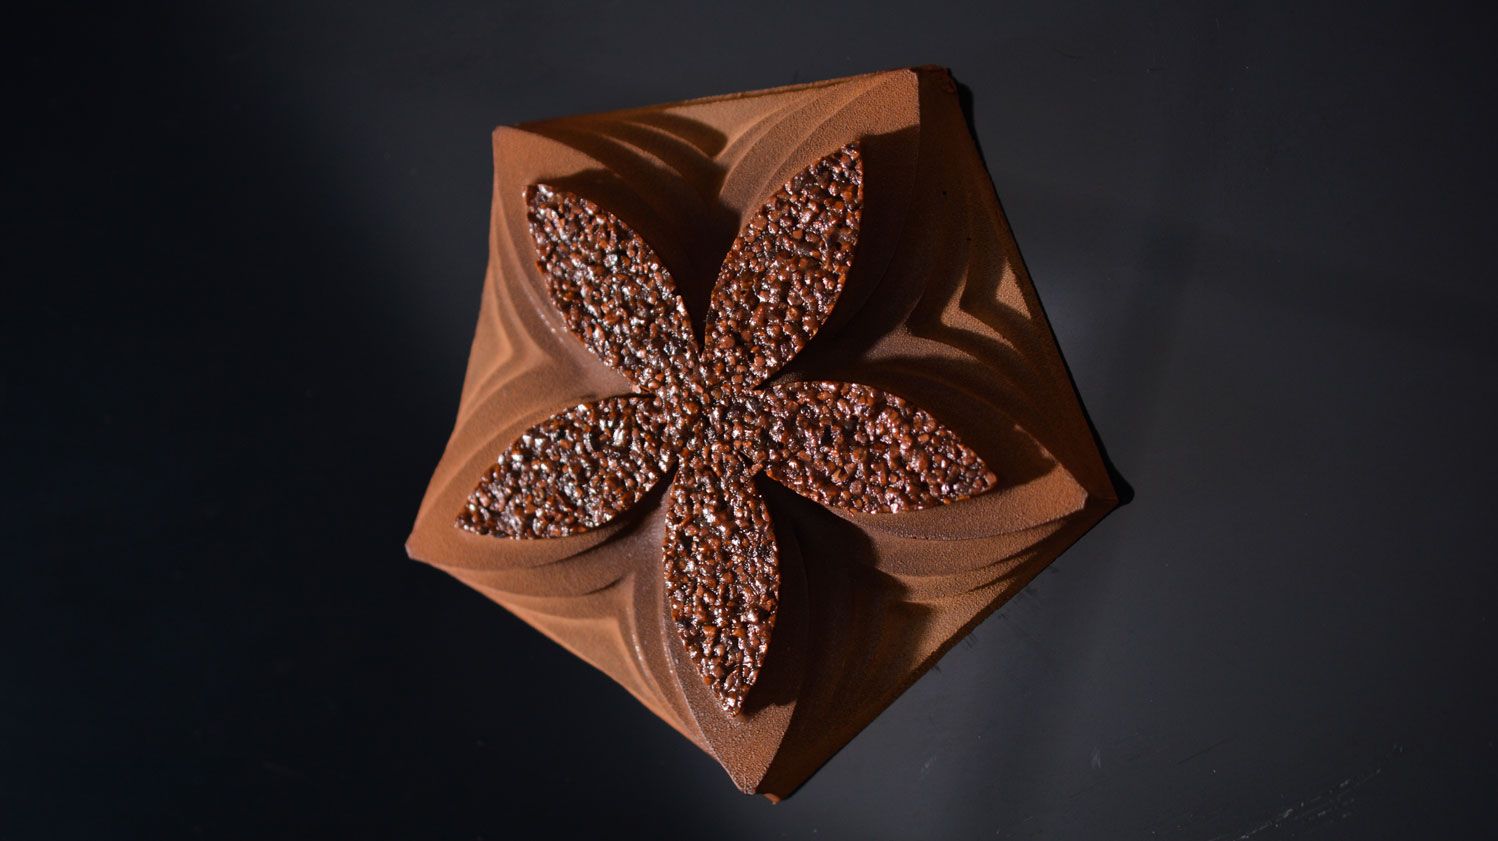 Fleur de Cacao